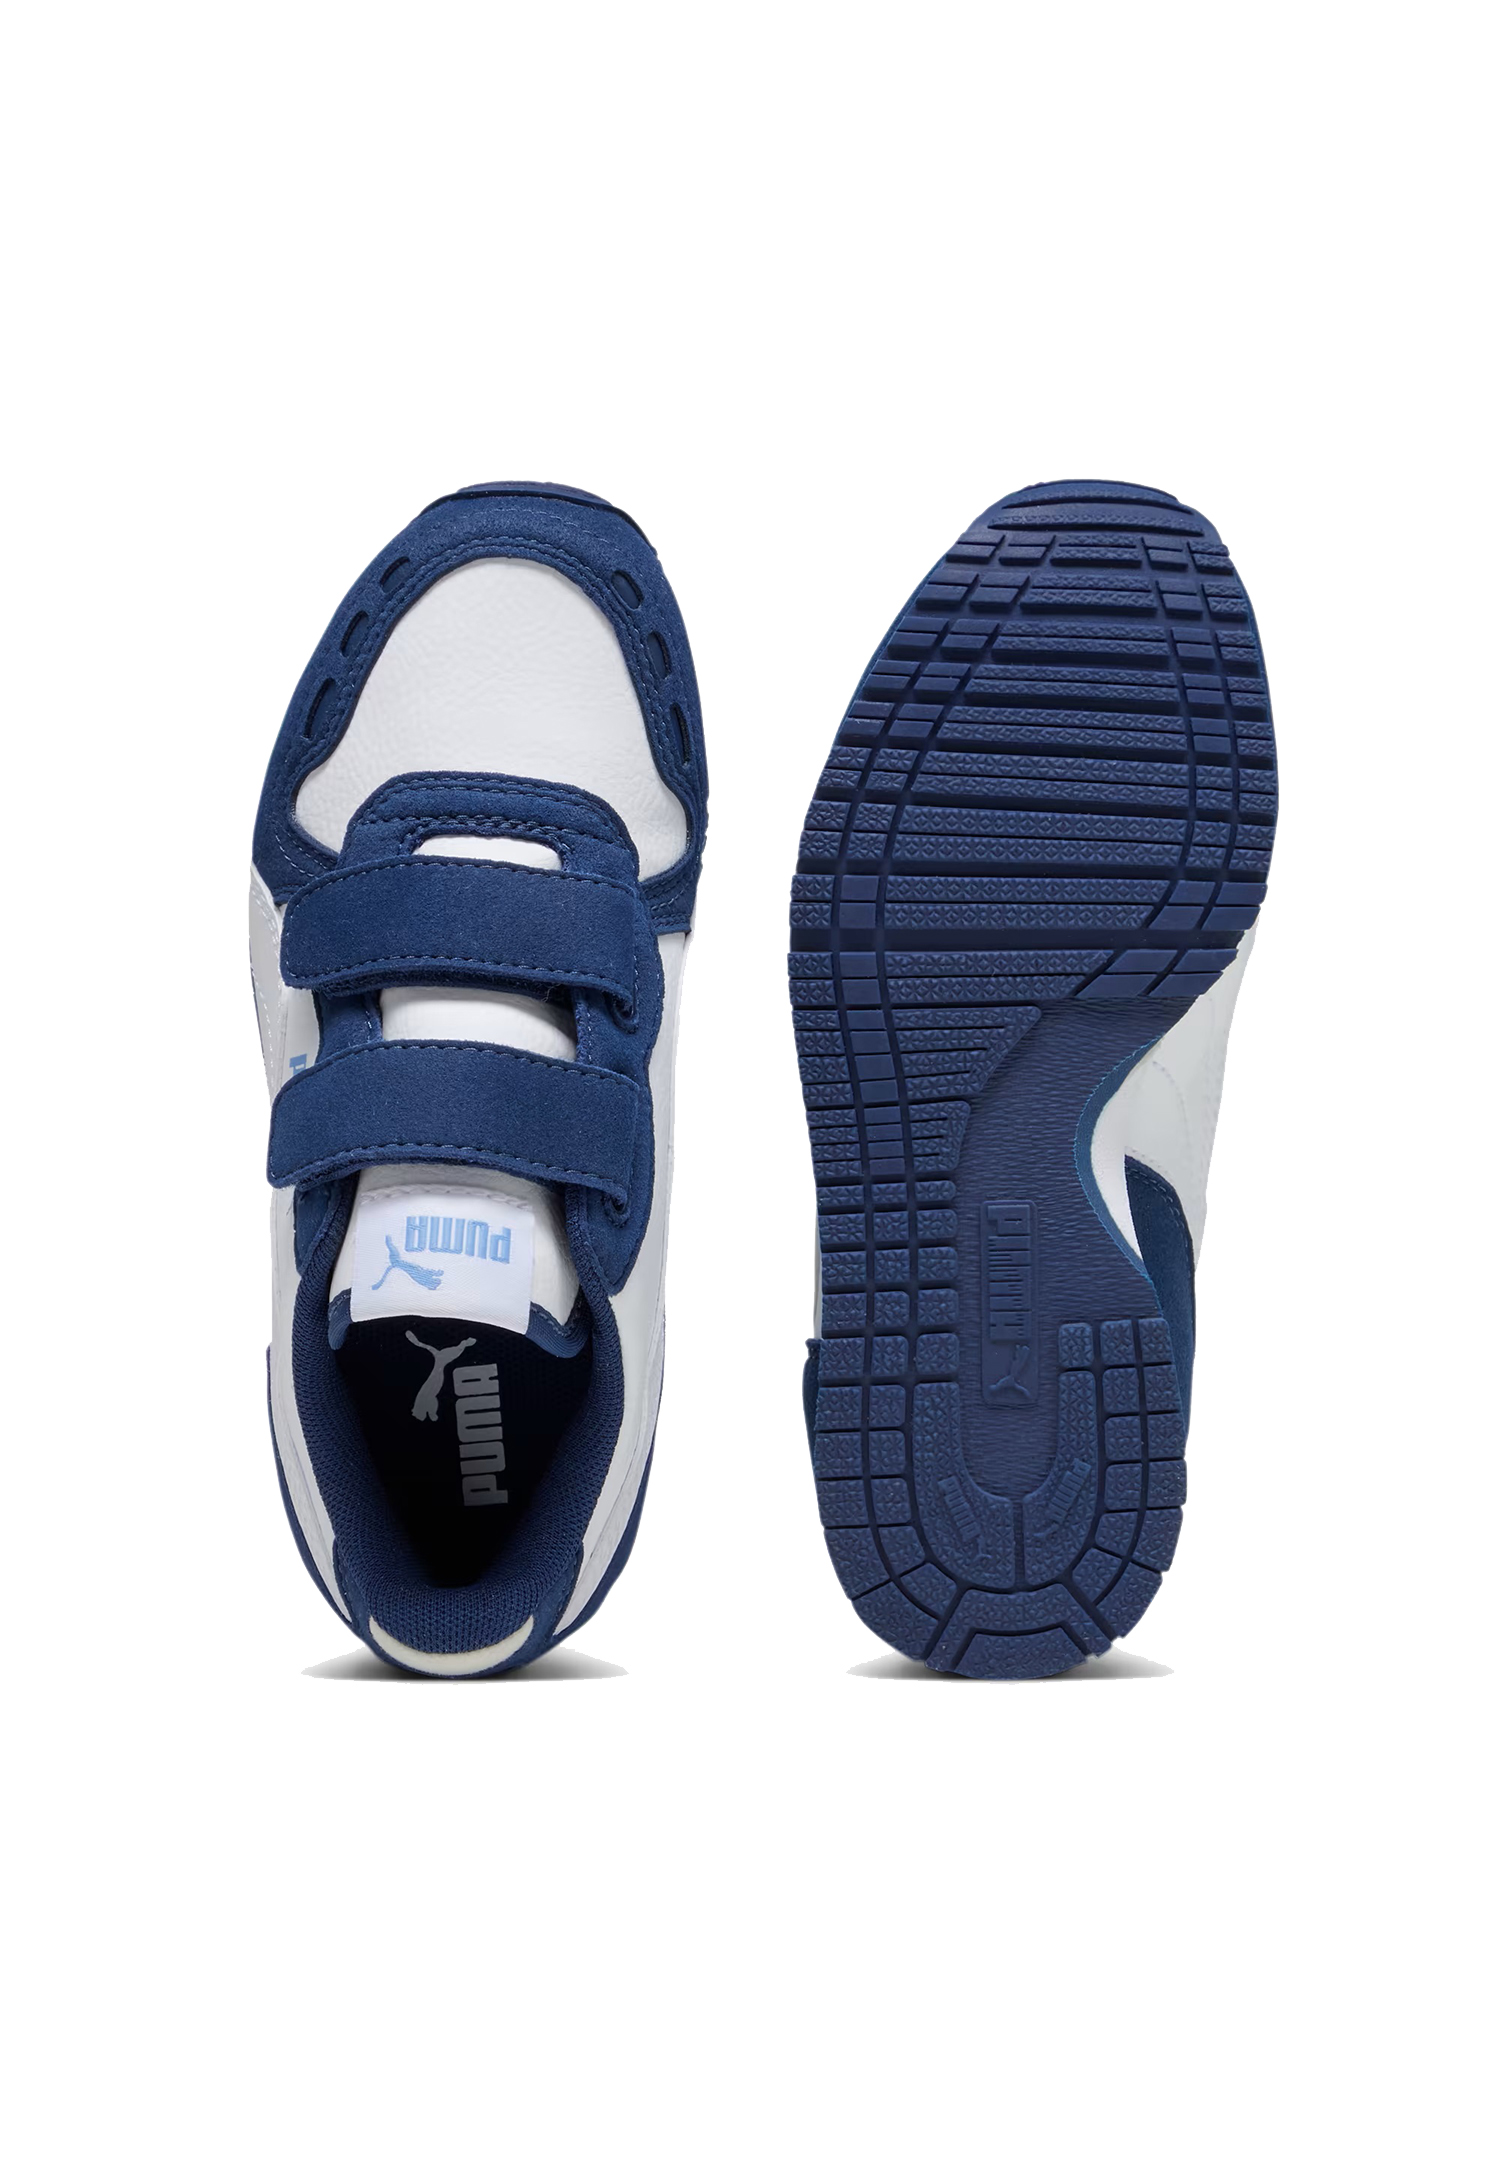 PUMA Cabana Racer SL  20 V PS Kinder Unisex Sneaker Turnschuhe 383730 blau